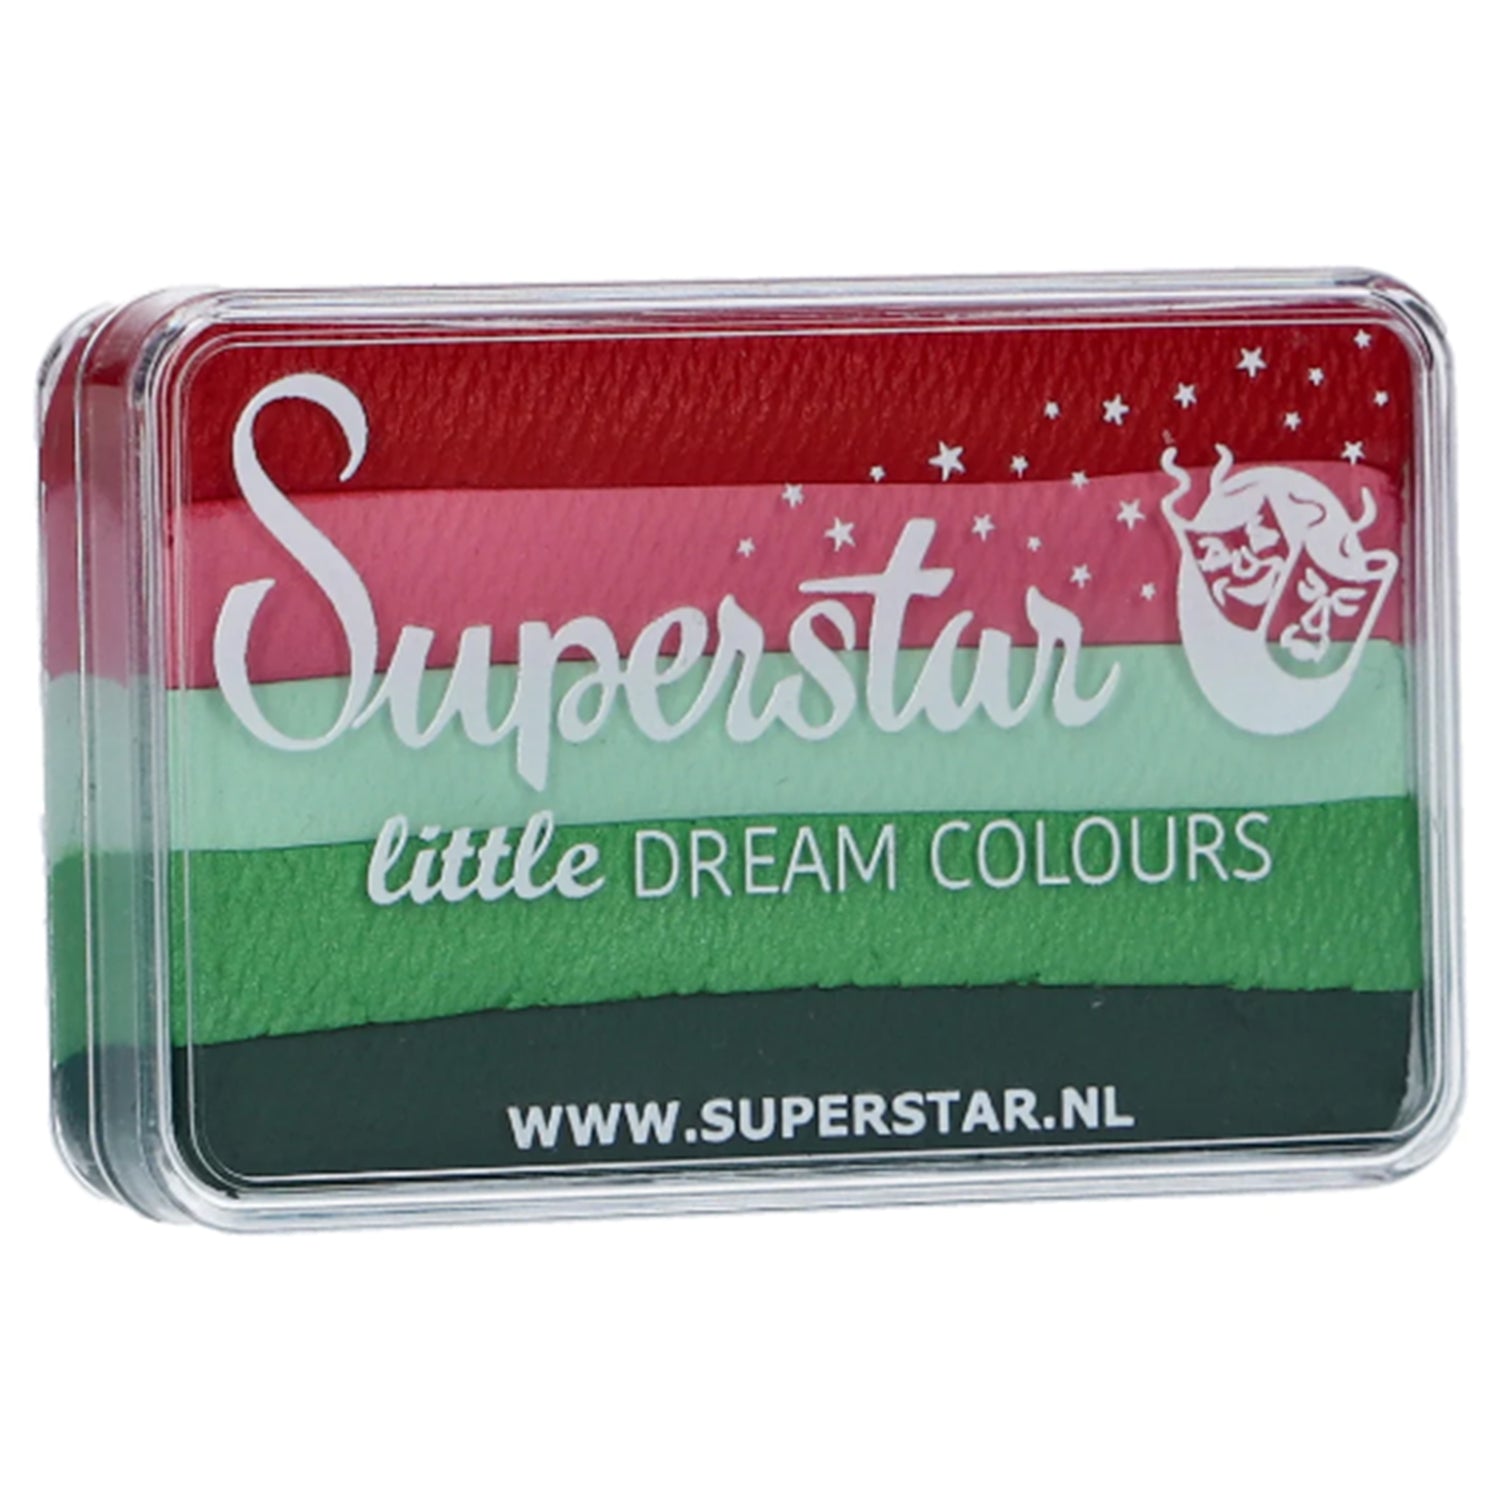 Superstar Dream Colours Rainbow Cake - Little Bloom (1.06 oz/30 gm)